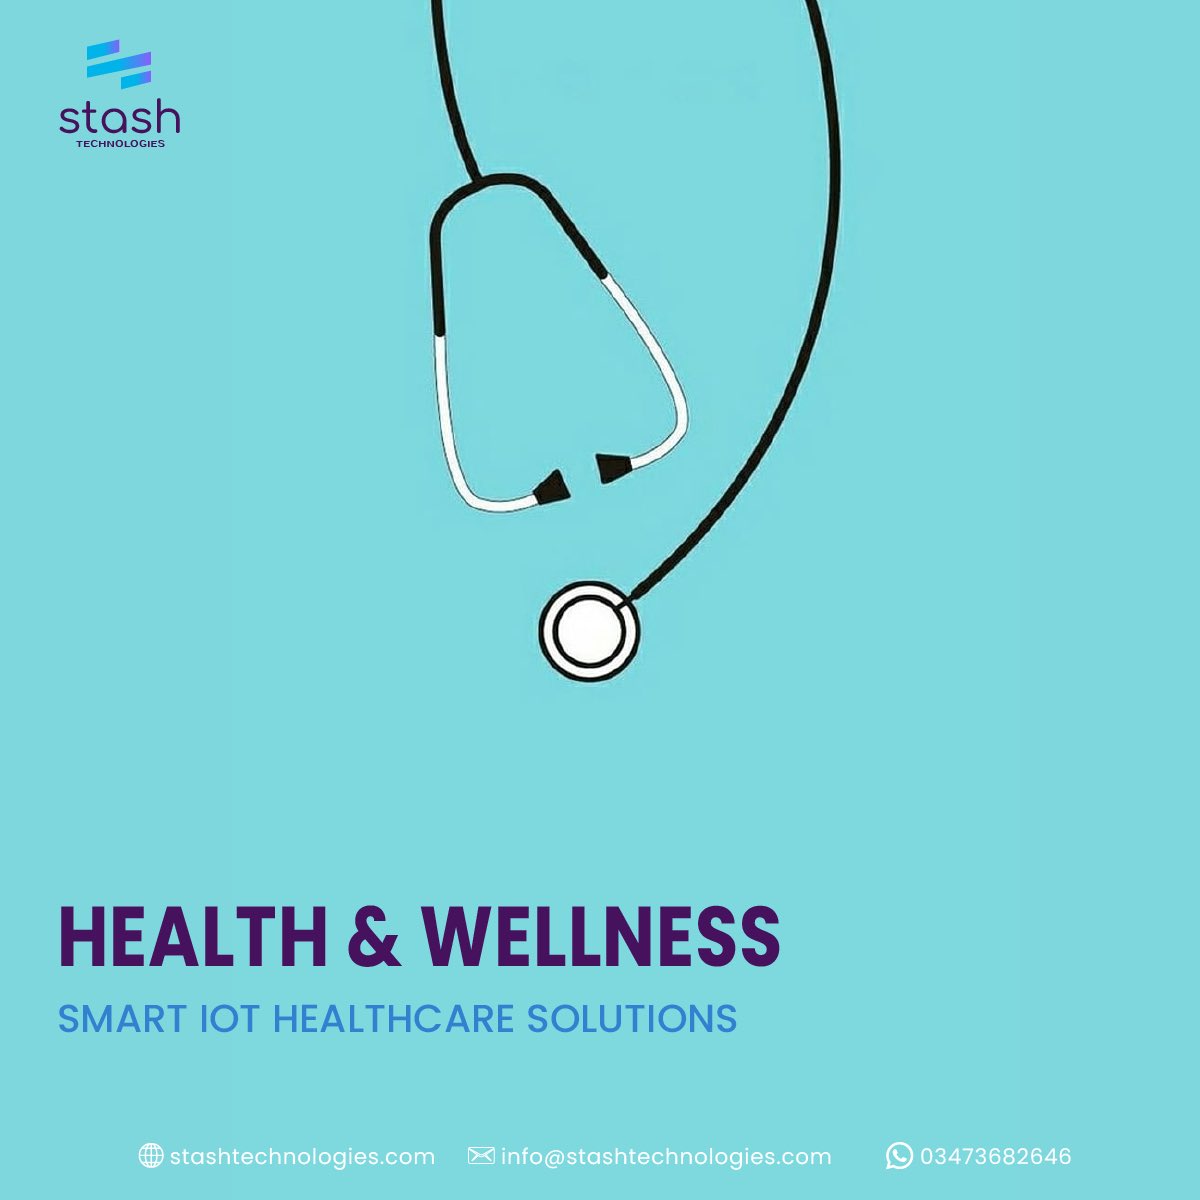 Health & Wellness - Smart IOT Healthcare Solutions

#stashtechnologies #softwarehouse #techhouse #techcompany #technology #techtrends #itconsultancy #digitalmarketing #webdevelopment #appdevelopment #mobileapp #wordpress #ecommerce #futureinnovation #business #pakistan #islamabad